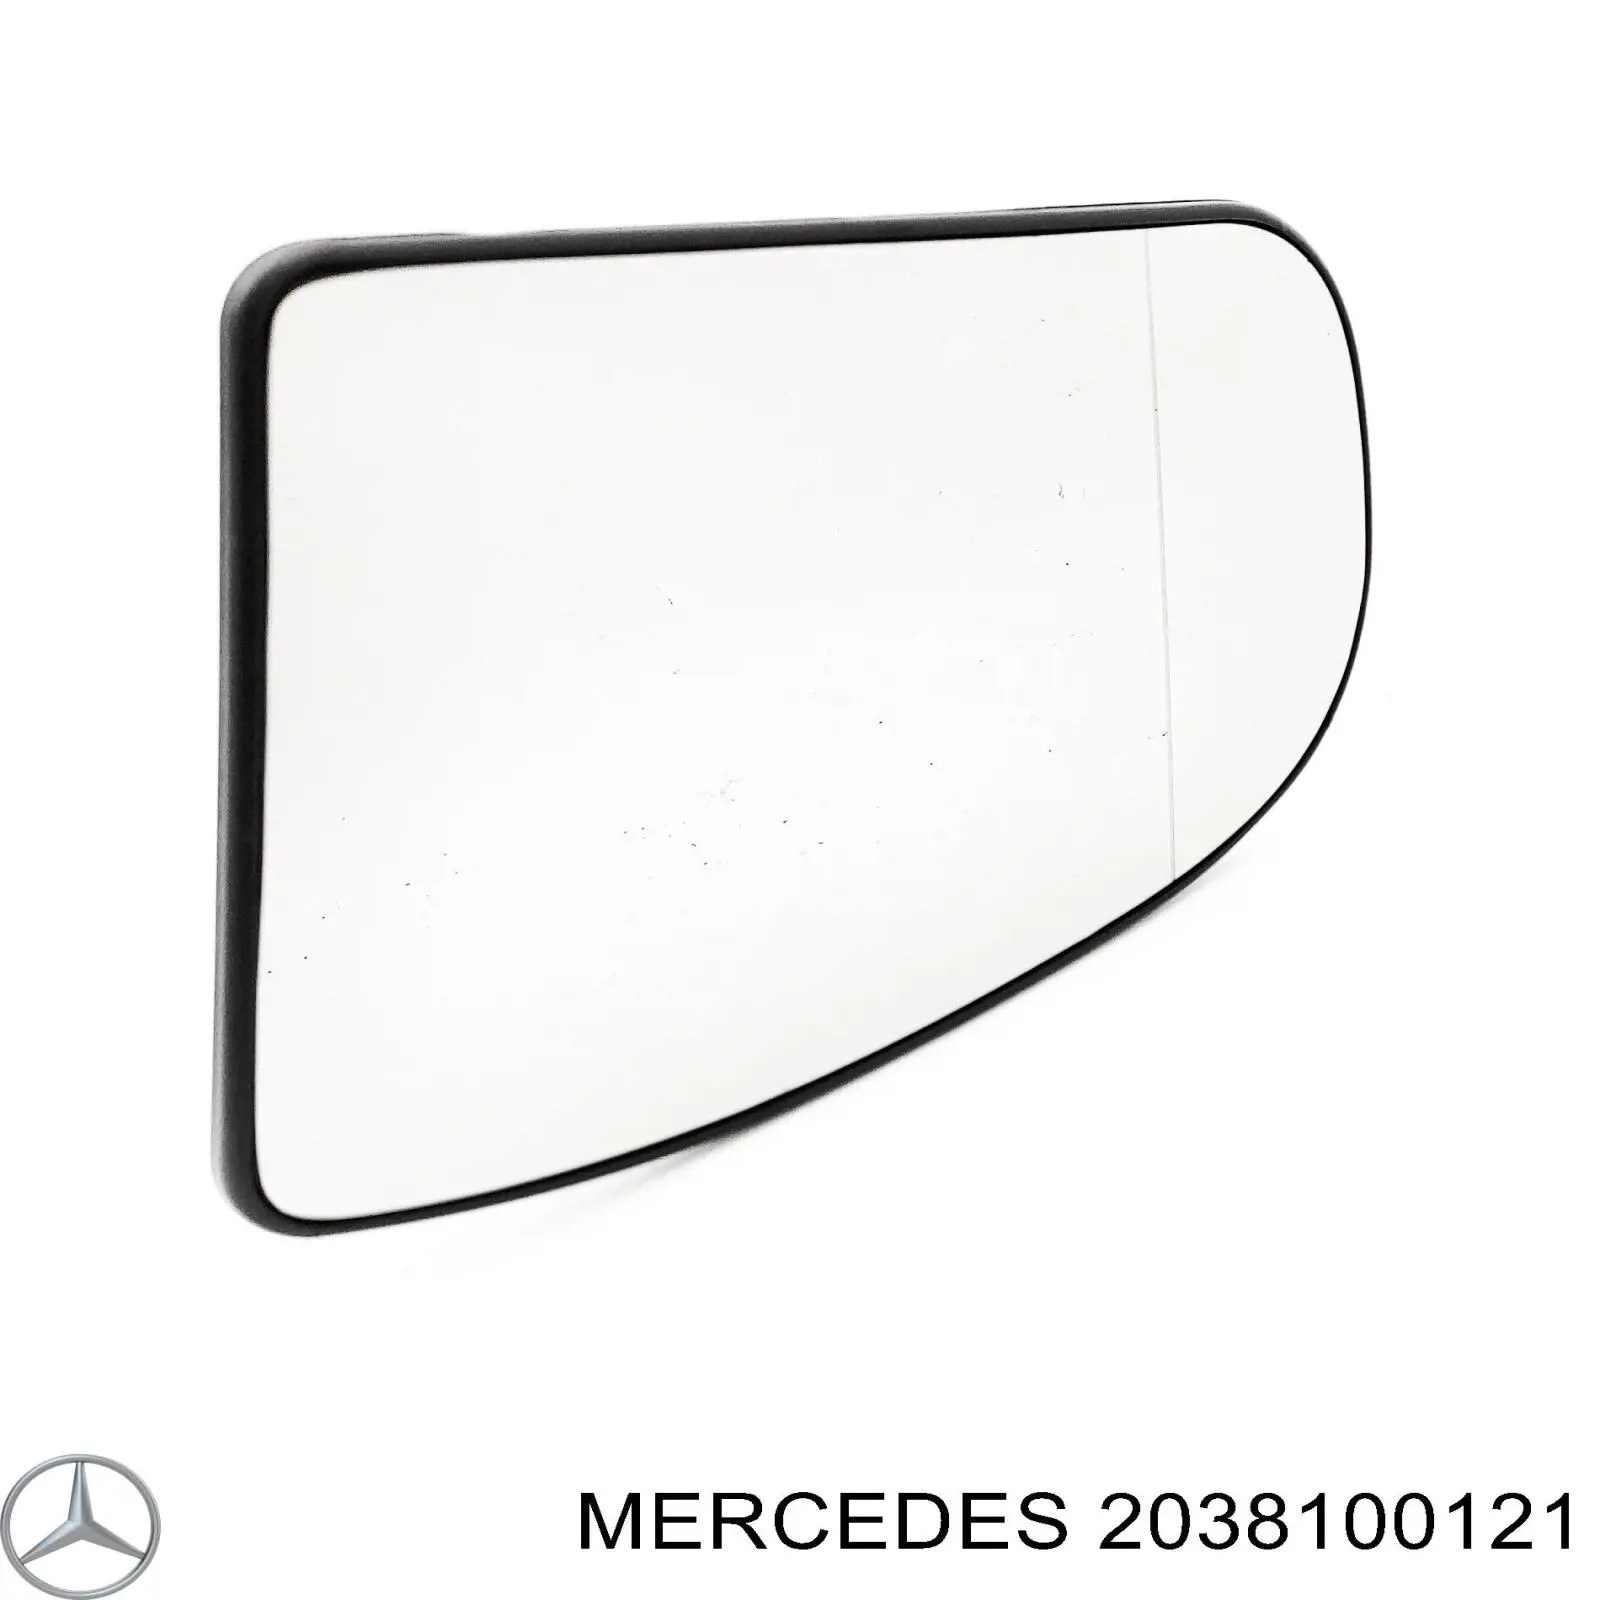 2038100121 Mercedes cristal de espejo retrovisor exterior izquierdo